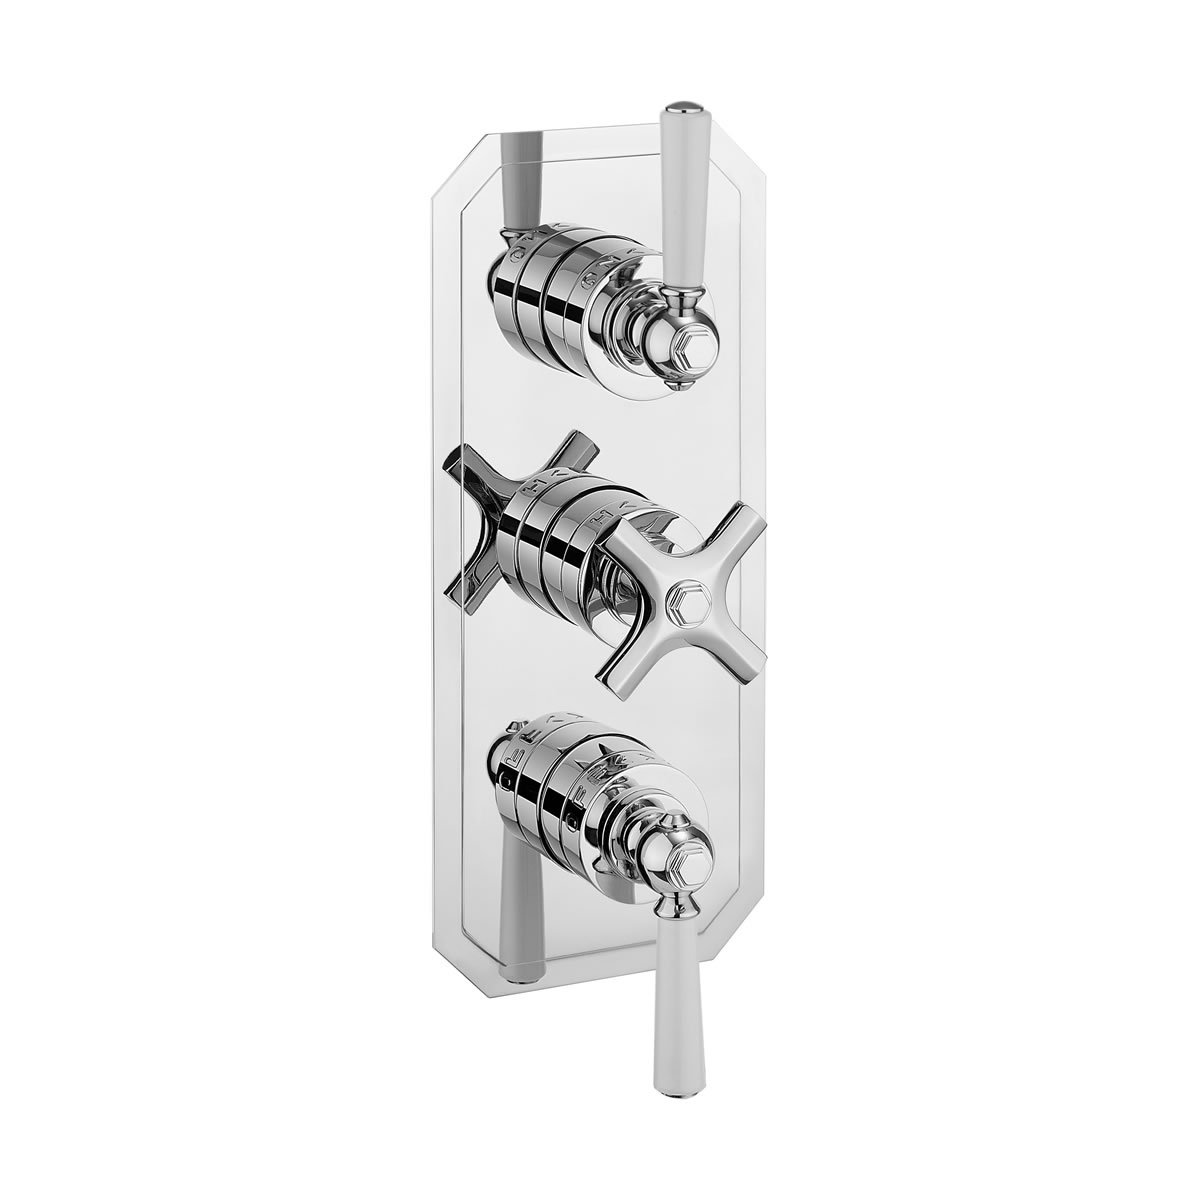 Waldorf Lever slimline thermostatic shower valve with 2 way diverter